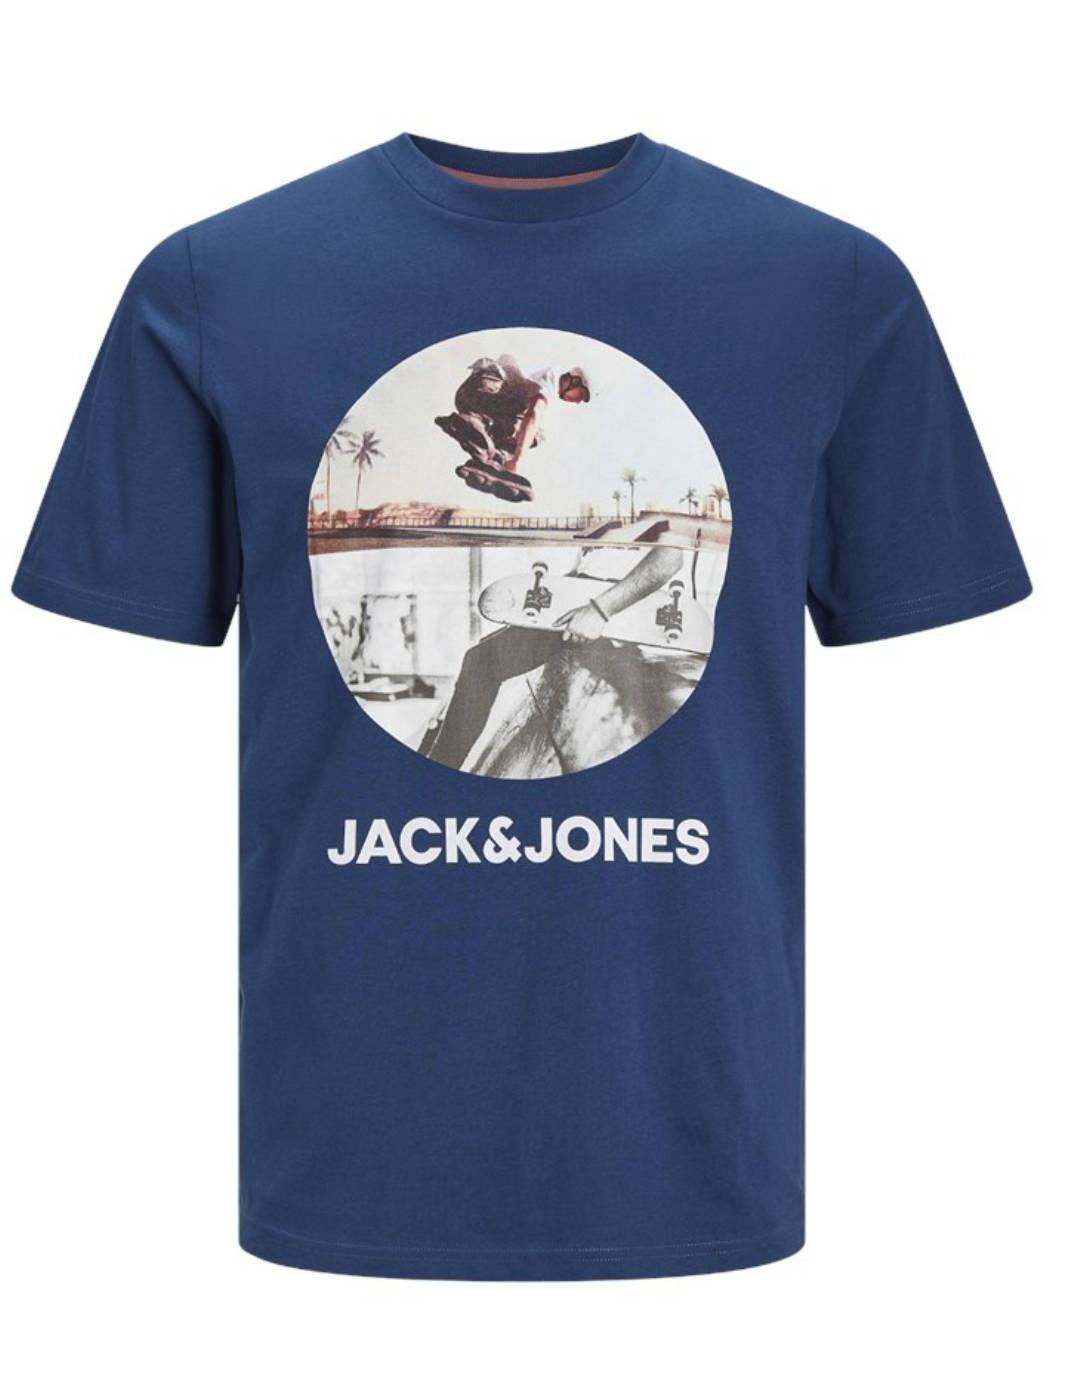 Camiseta Jack&Jones Junior Navin marino manga corta de niño